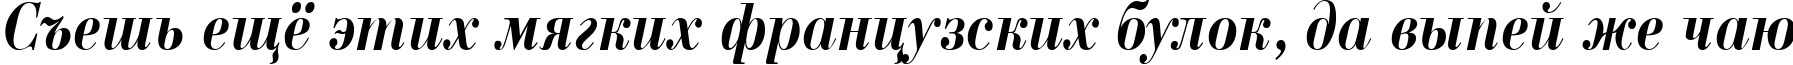 Пример написания шрифтом a_BodoniNovaNr BoldItalic текста на русском